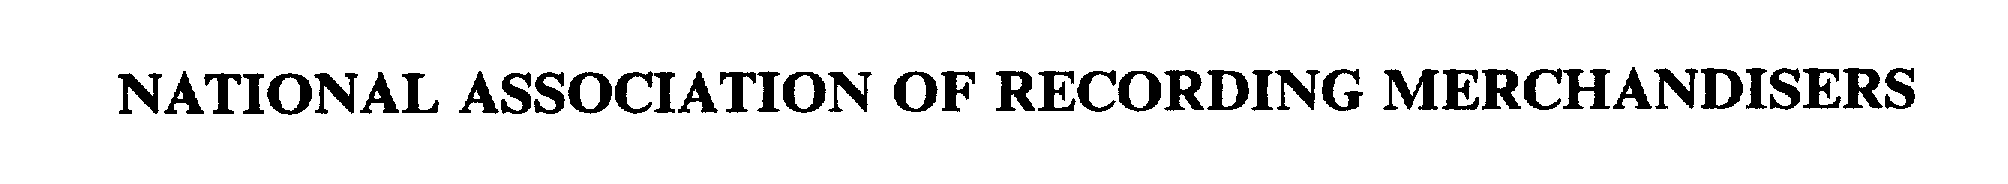  NATIONAL ASSOCIATION OF RECORDING MERCHANDISERS